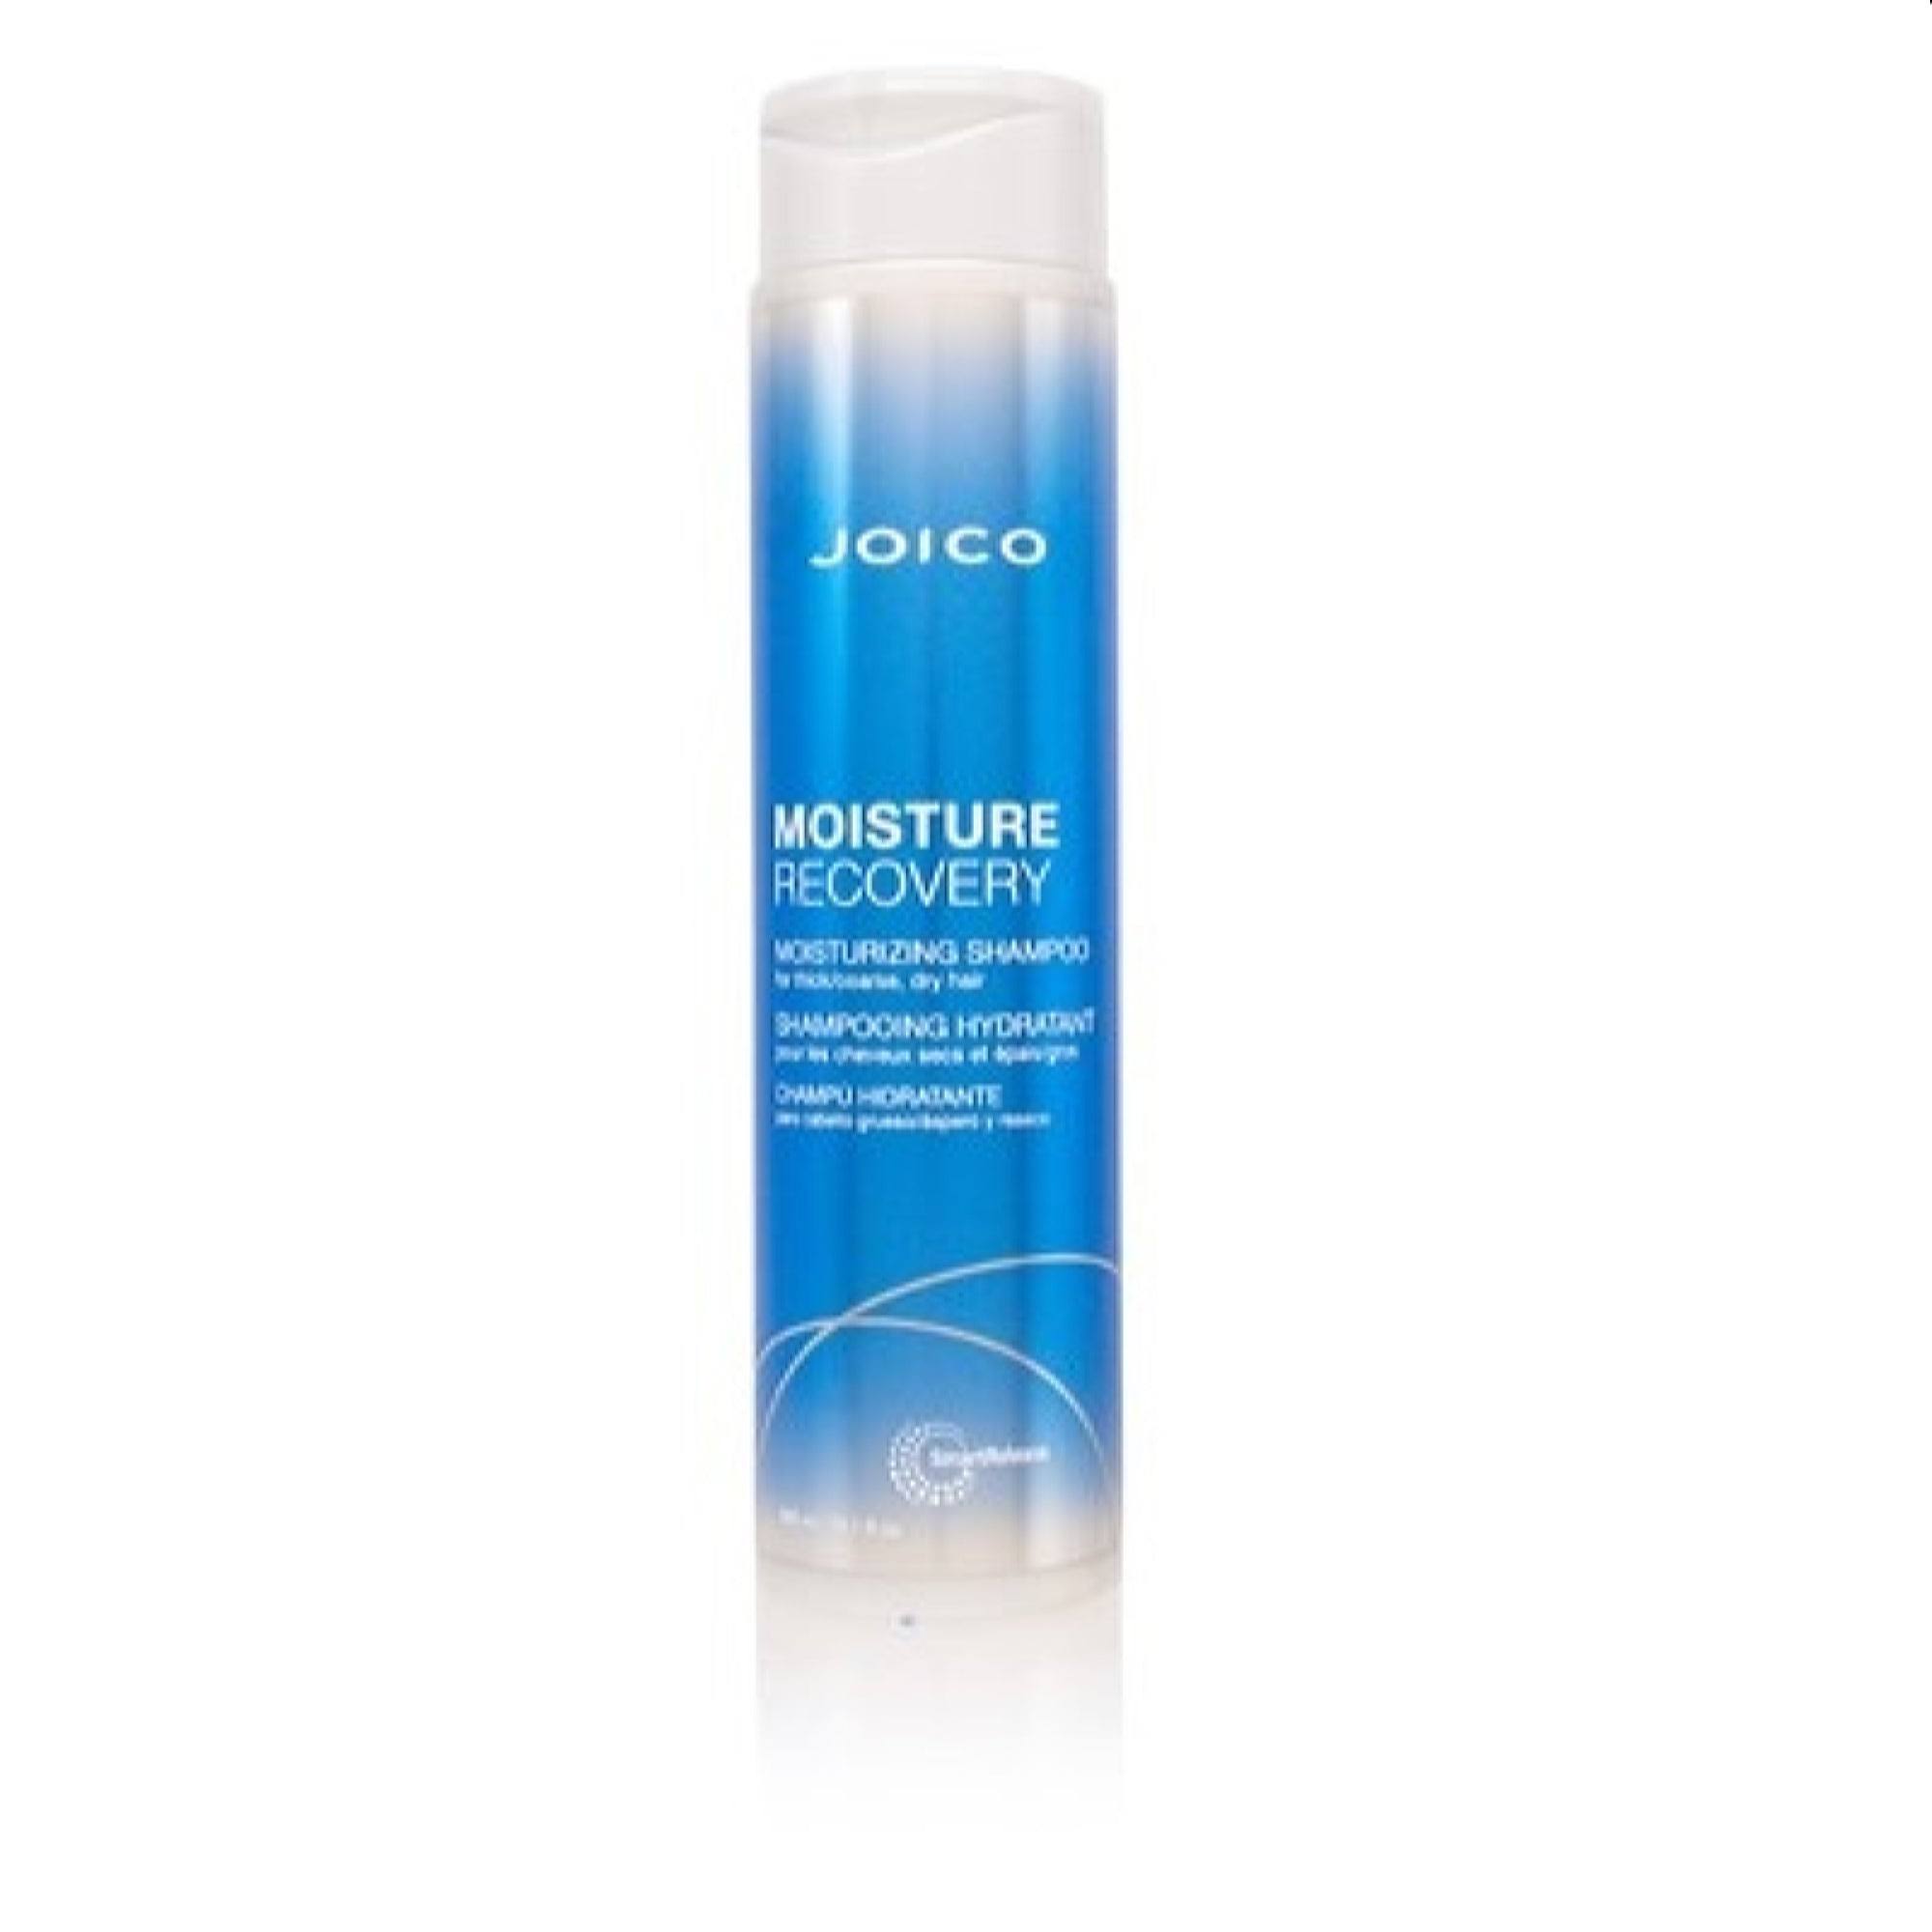 Joico Moisture Recovery Shampoo For Dry Hair 10.1 Oz